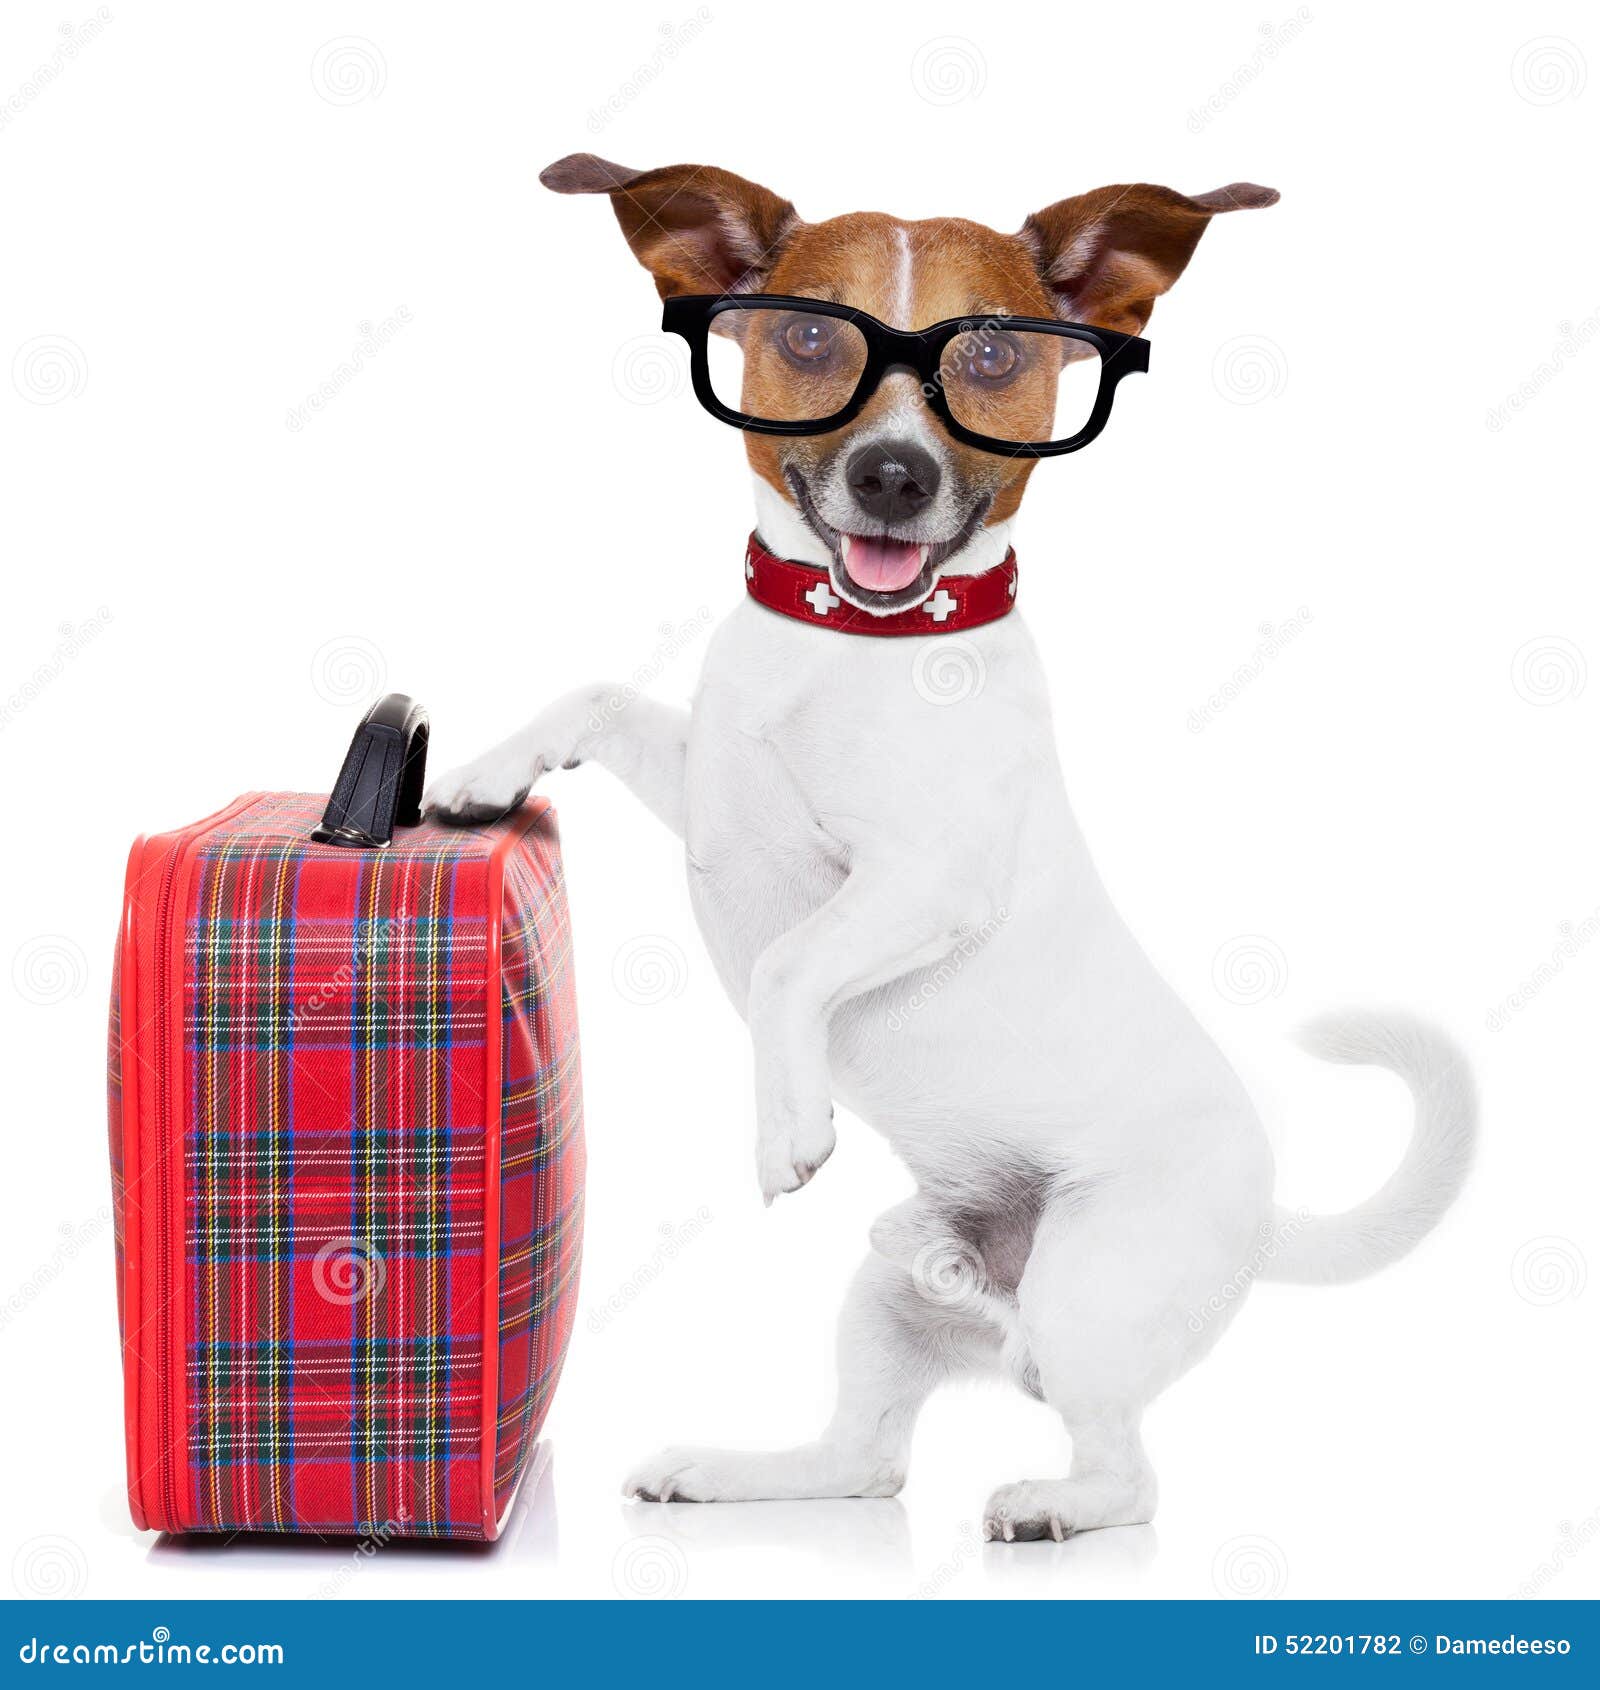 dog with luggage